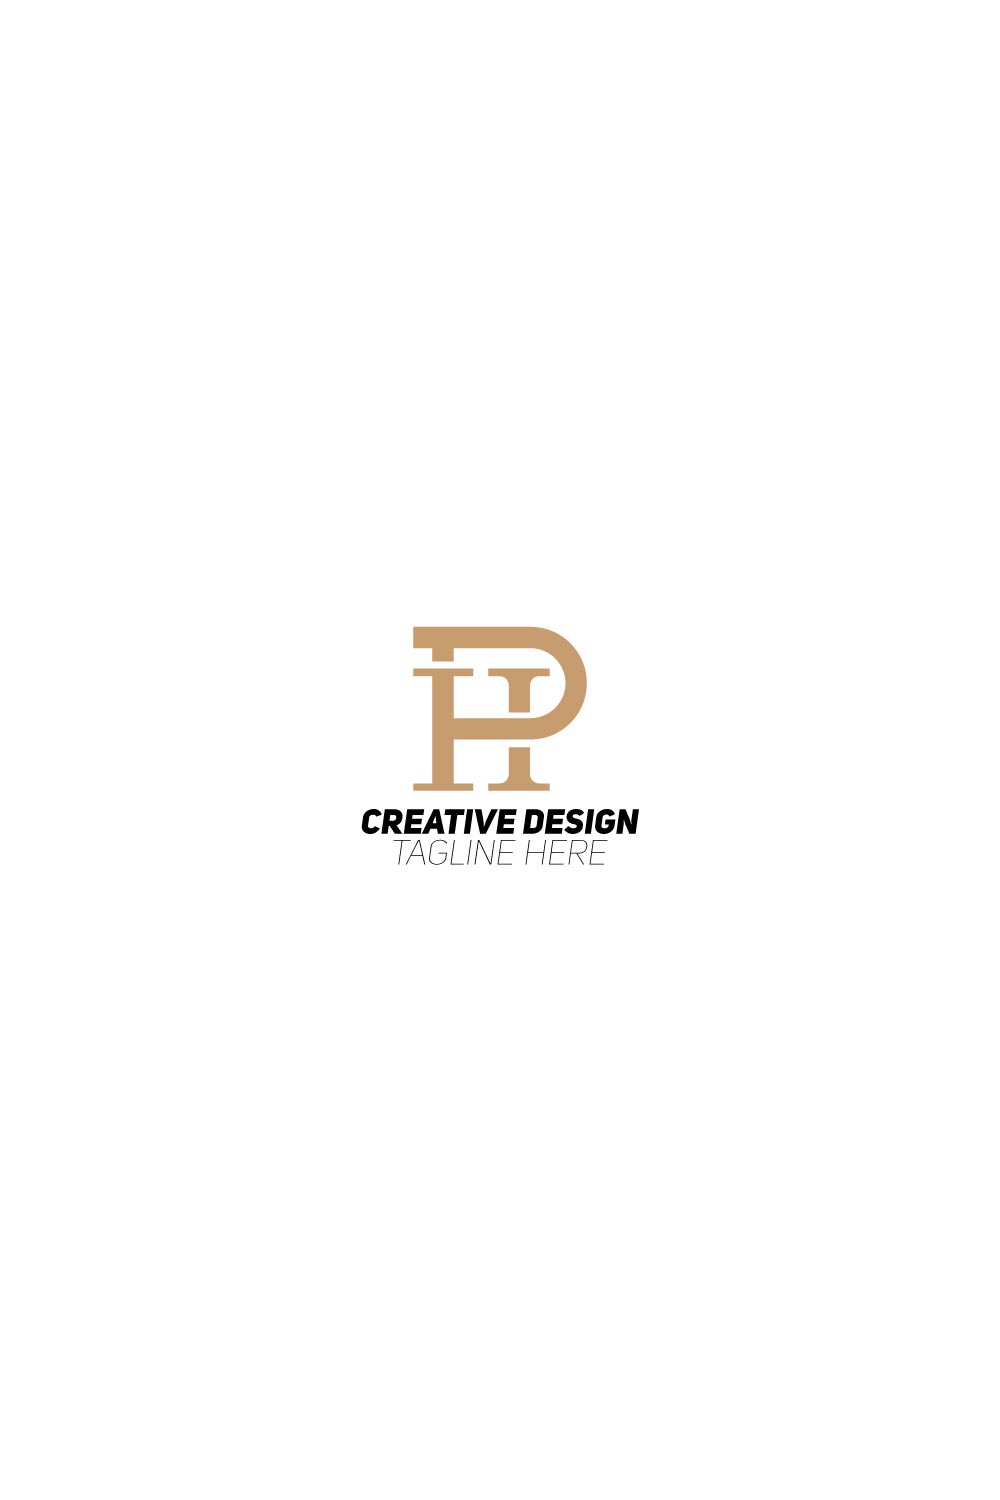 Letter PH logo design concept isolated on White background pinterest preview image.